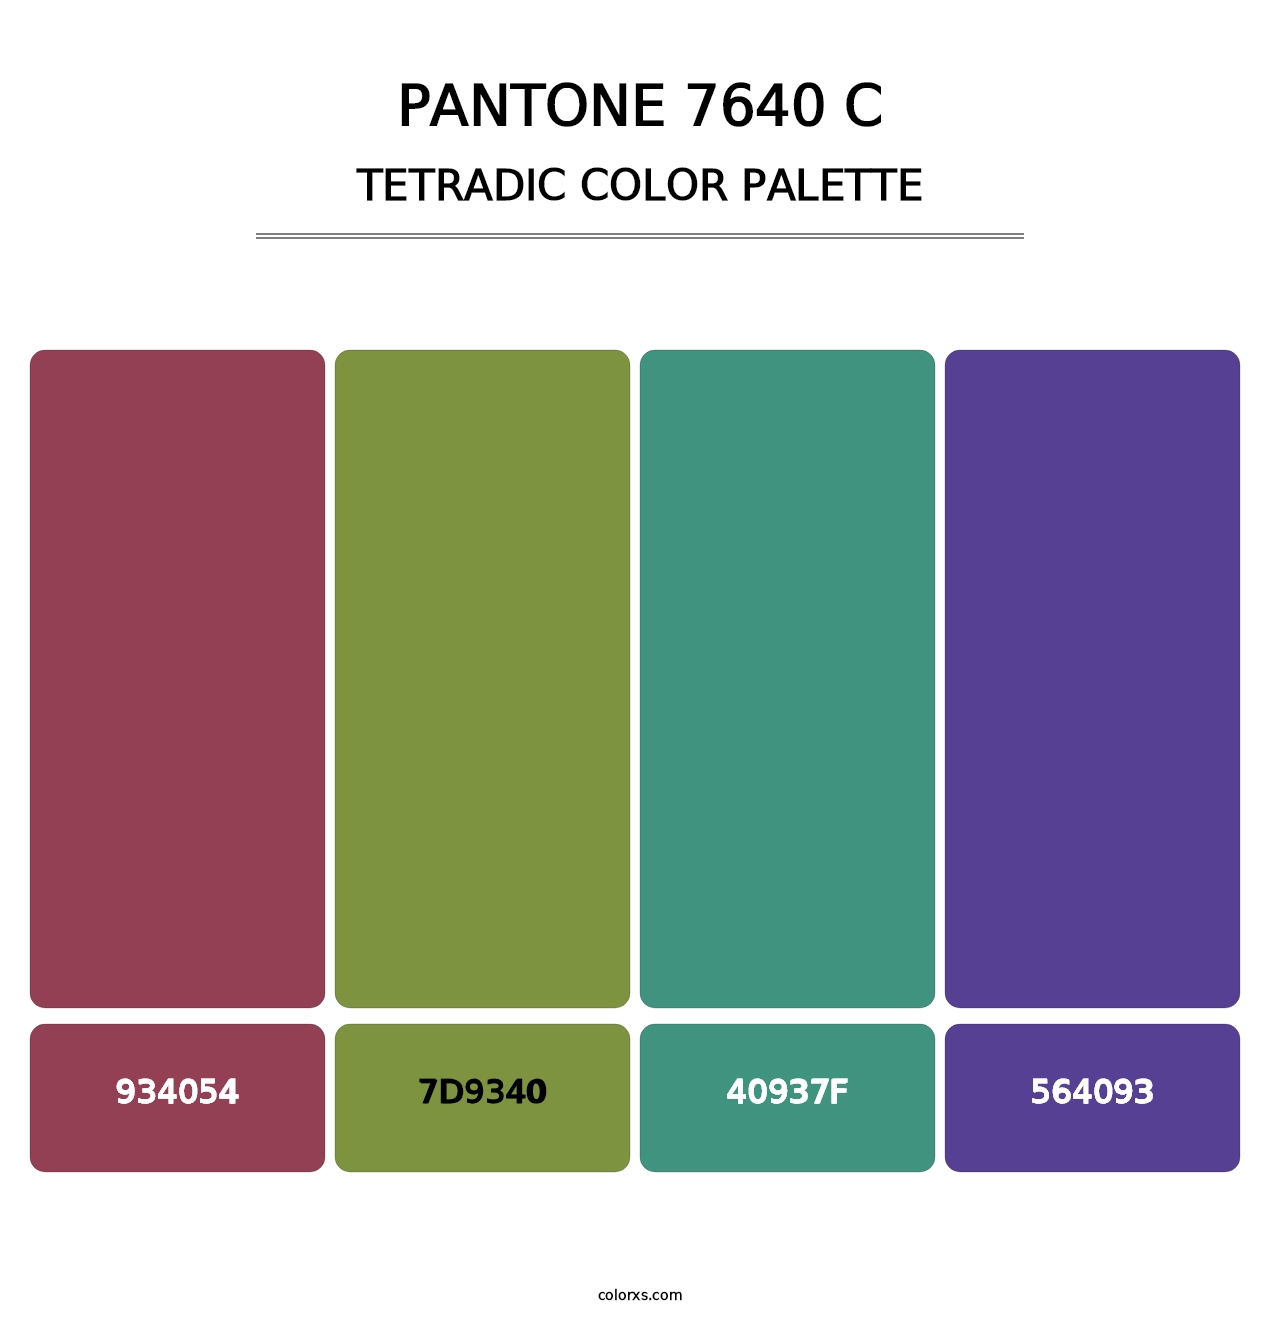 PANTONE 7640 C - Tetradic Color Palette